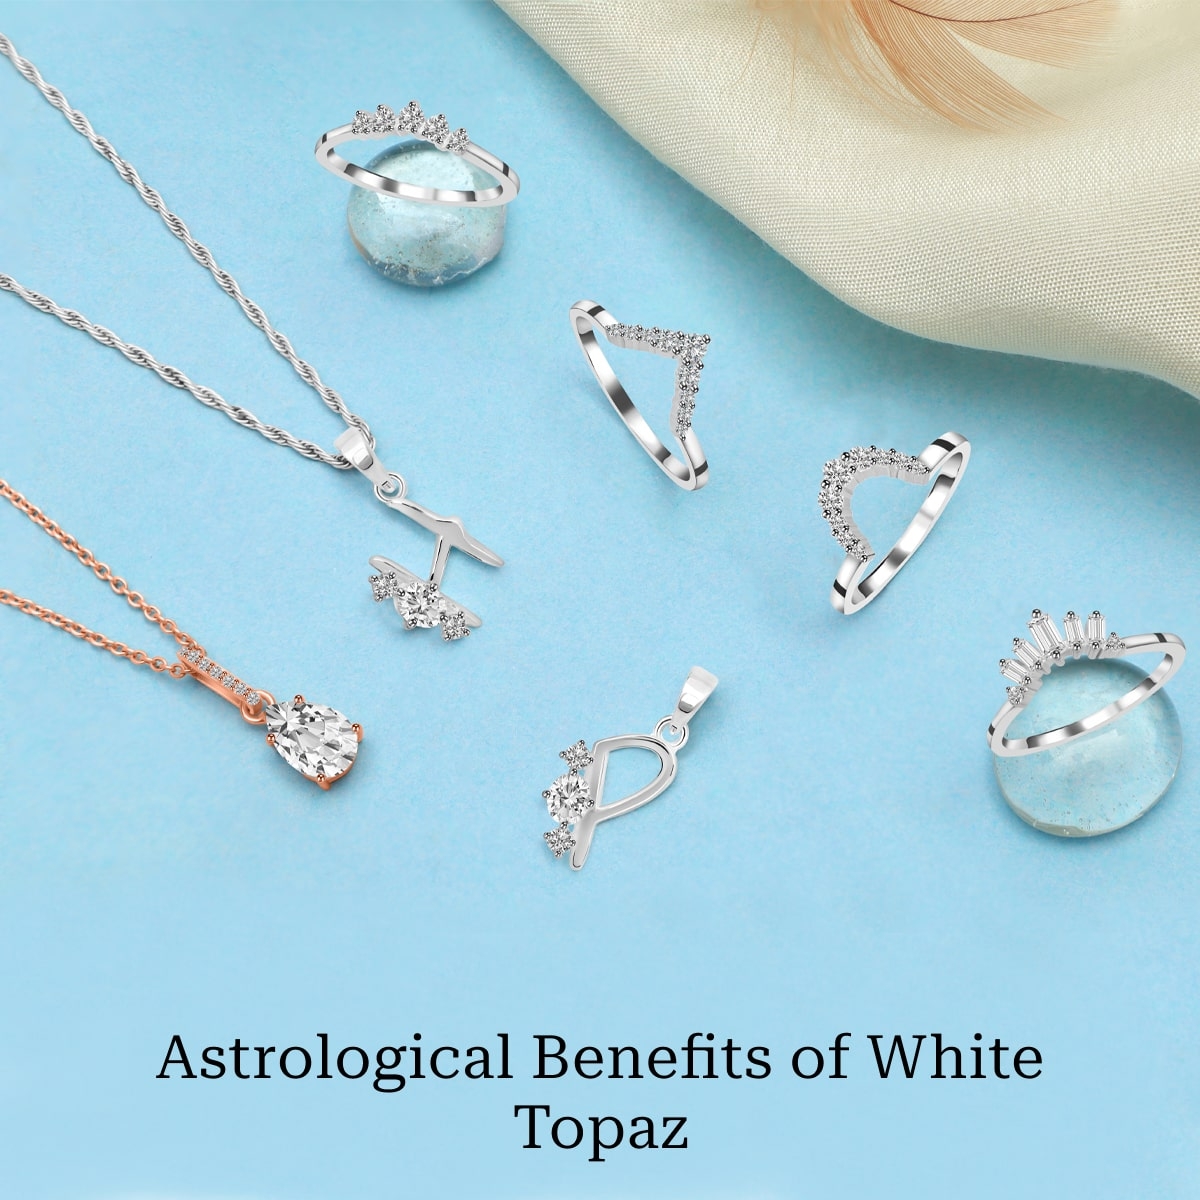 White Topaz Benefits in Astrology